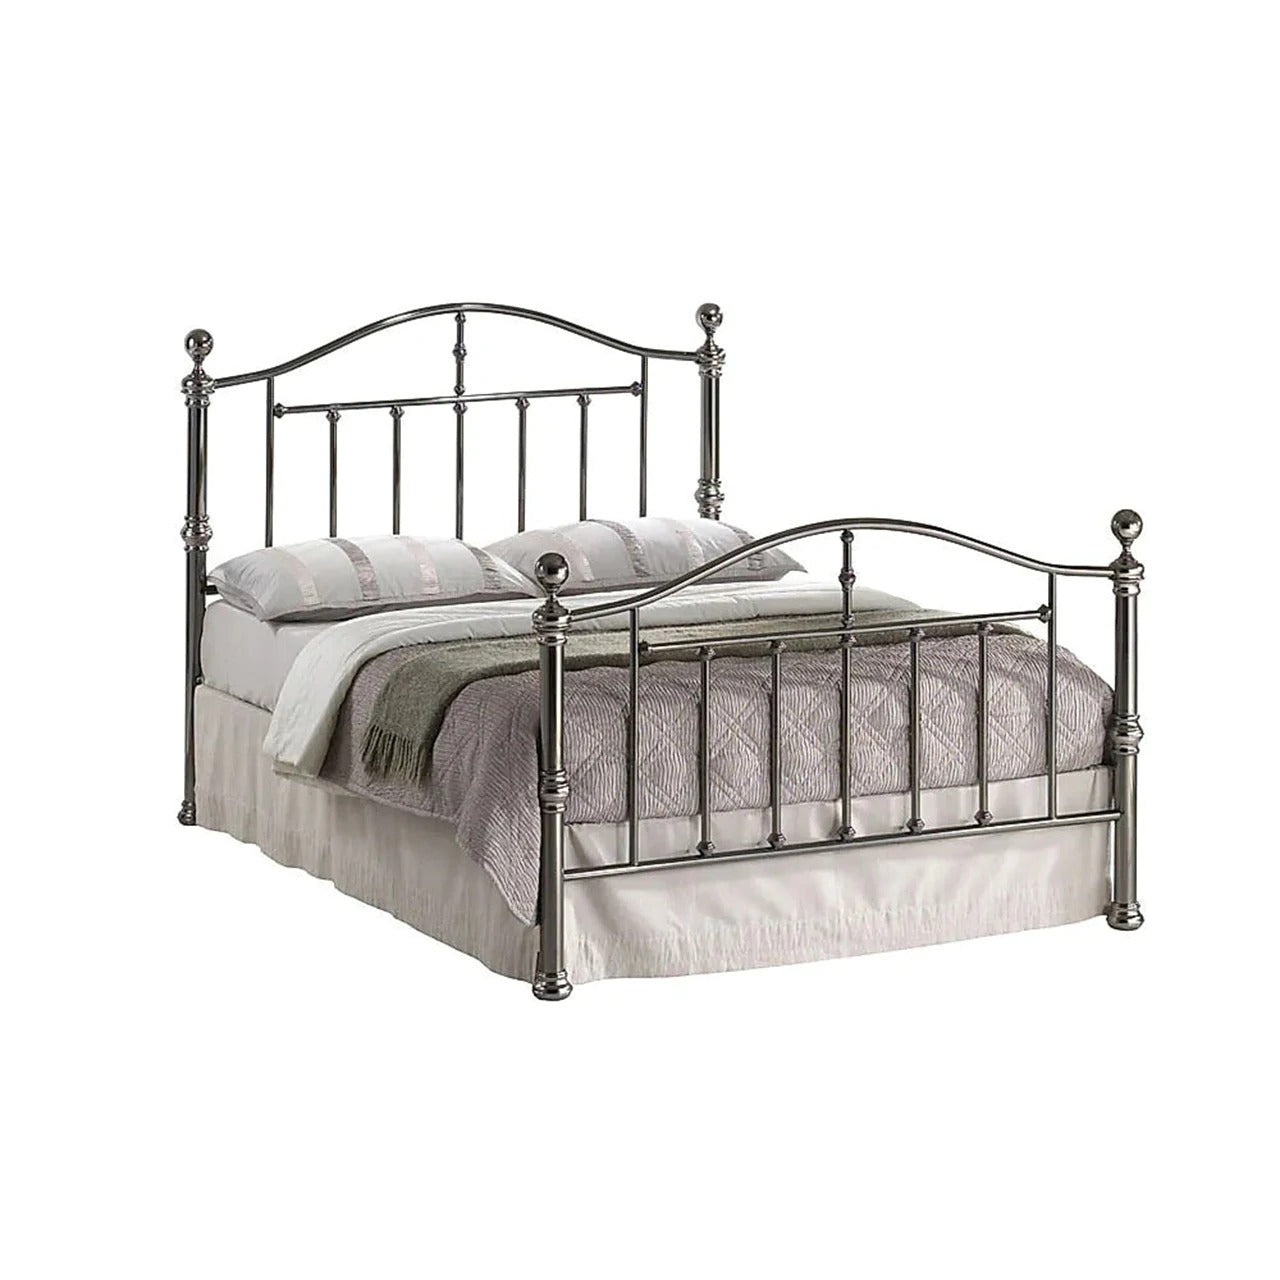 Steel Bed, Iron Bed, Metal Bed, Steel Cot, Steel Bed Price